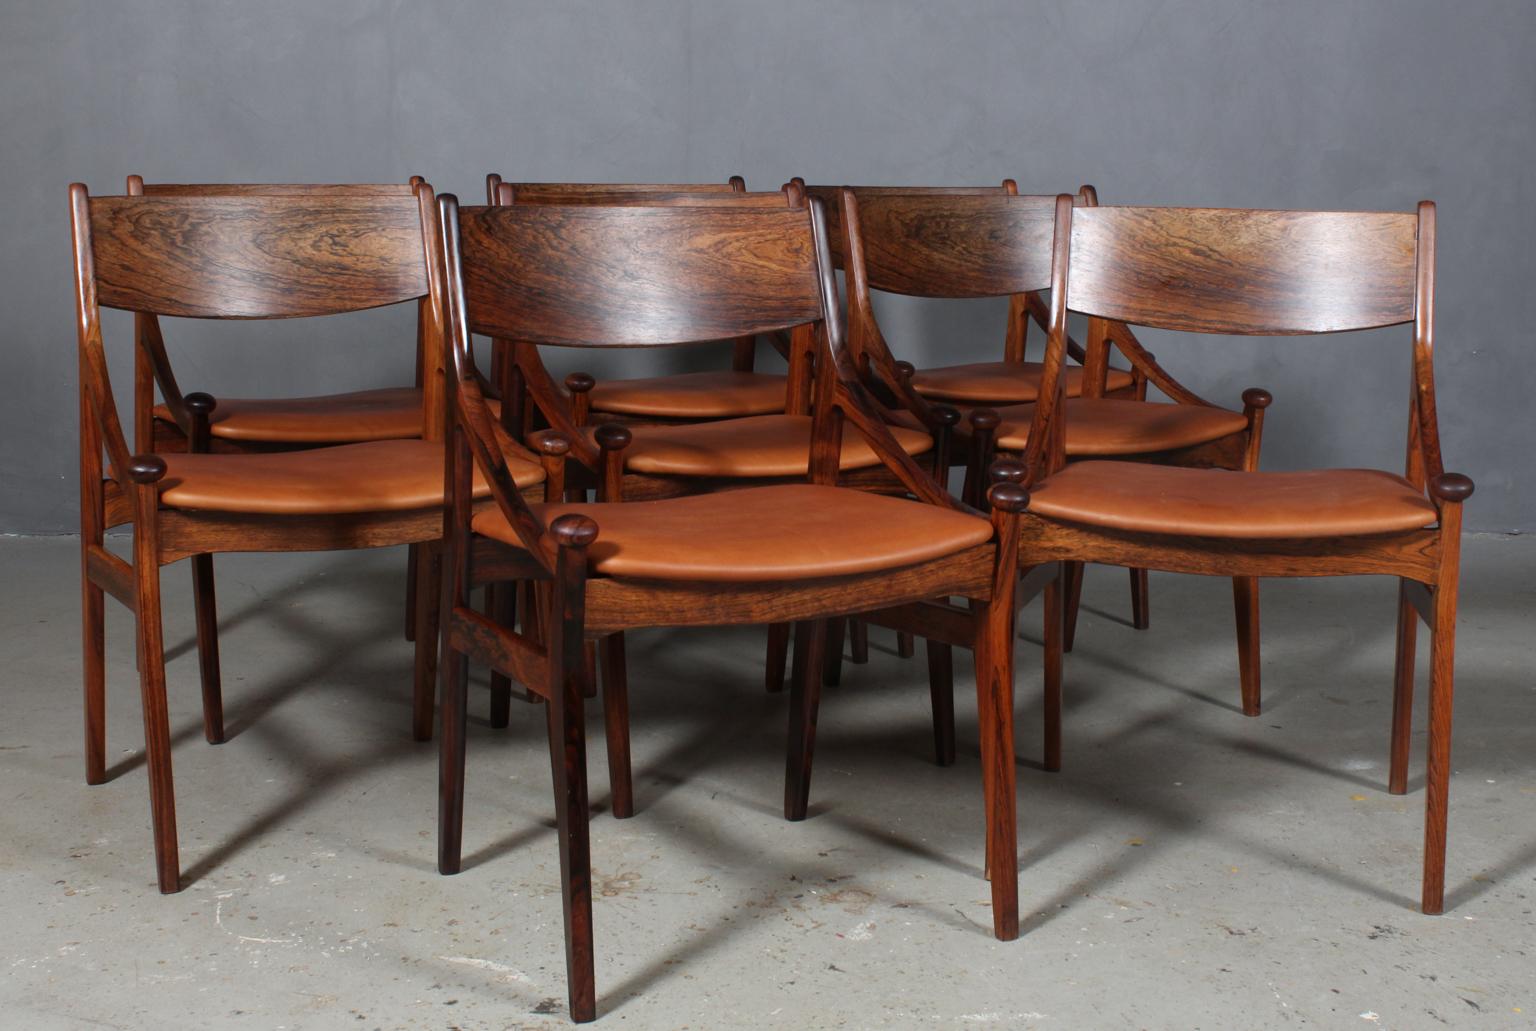 Vestervig Eriksen set of eight dining chairs in partly solid rosewood. 

Seats new upholstered with tan vintage aniline leather.

Made by Brdr. Tromborg’s Eftf., Møbelfabrik Vestervig Eriksen Aarhus.